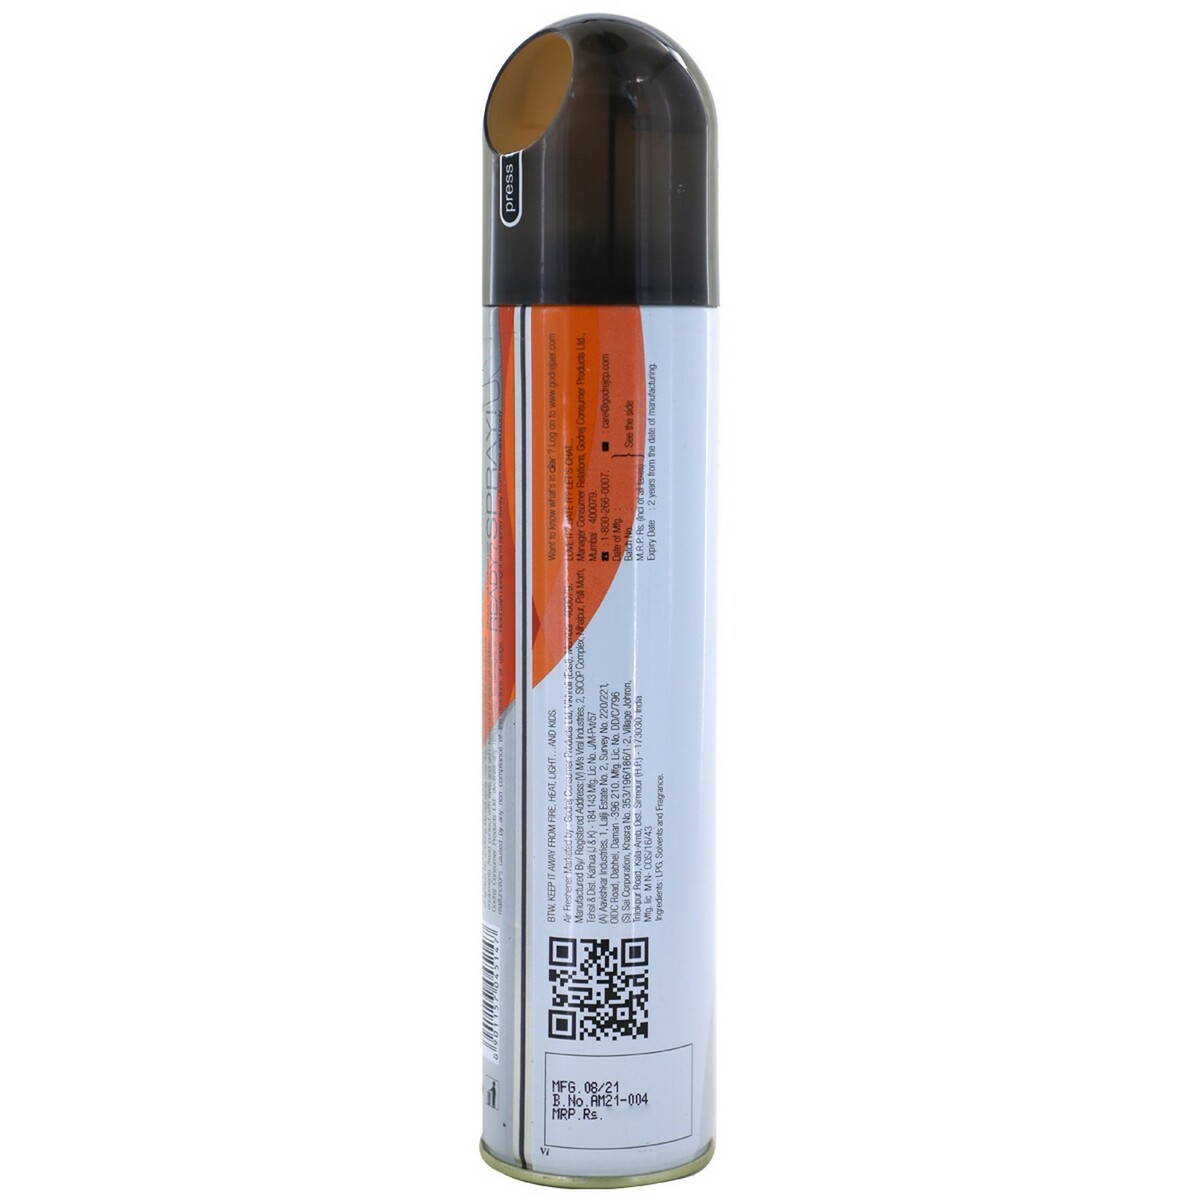 Godrej Aer Spray Air Freshener- Musk After Smoke 220 ml